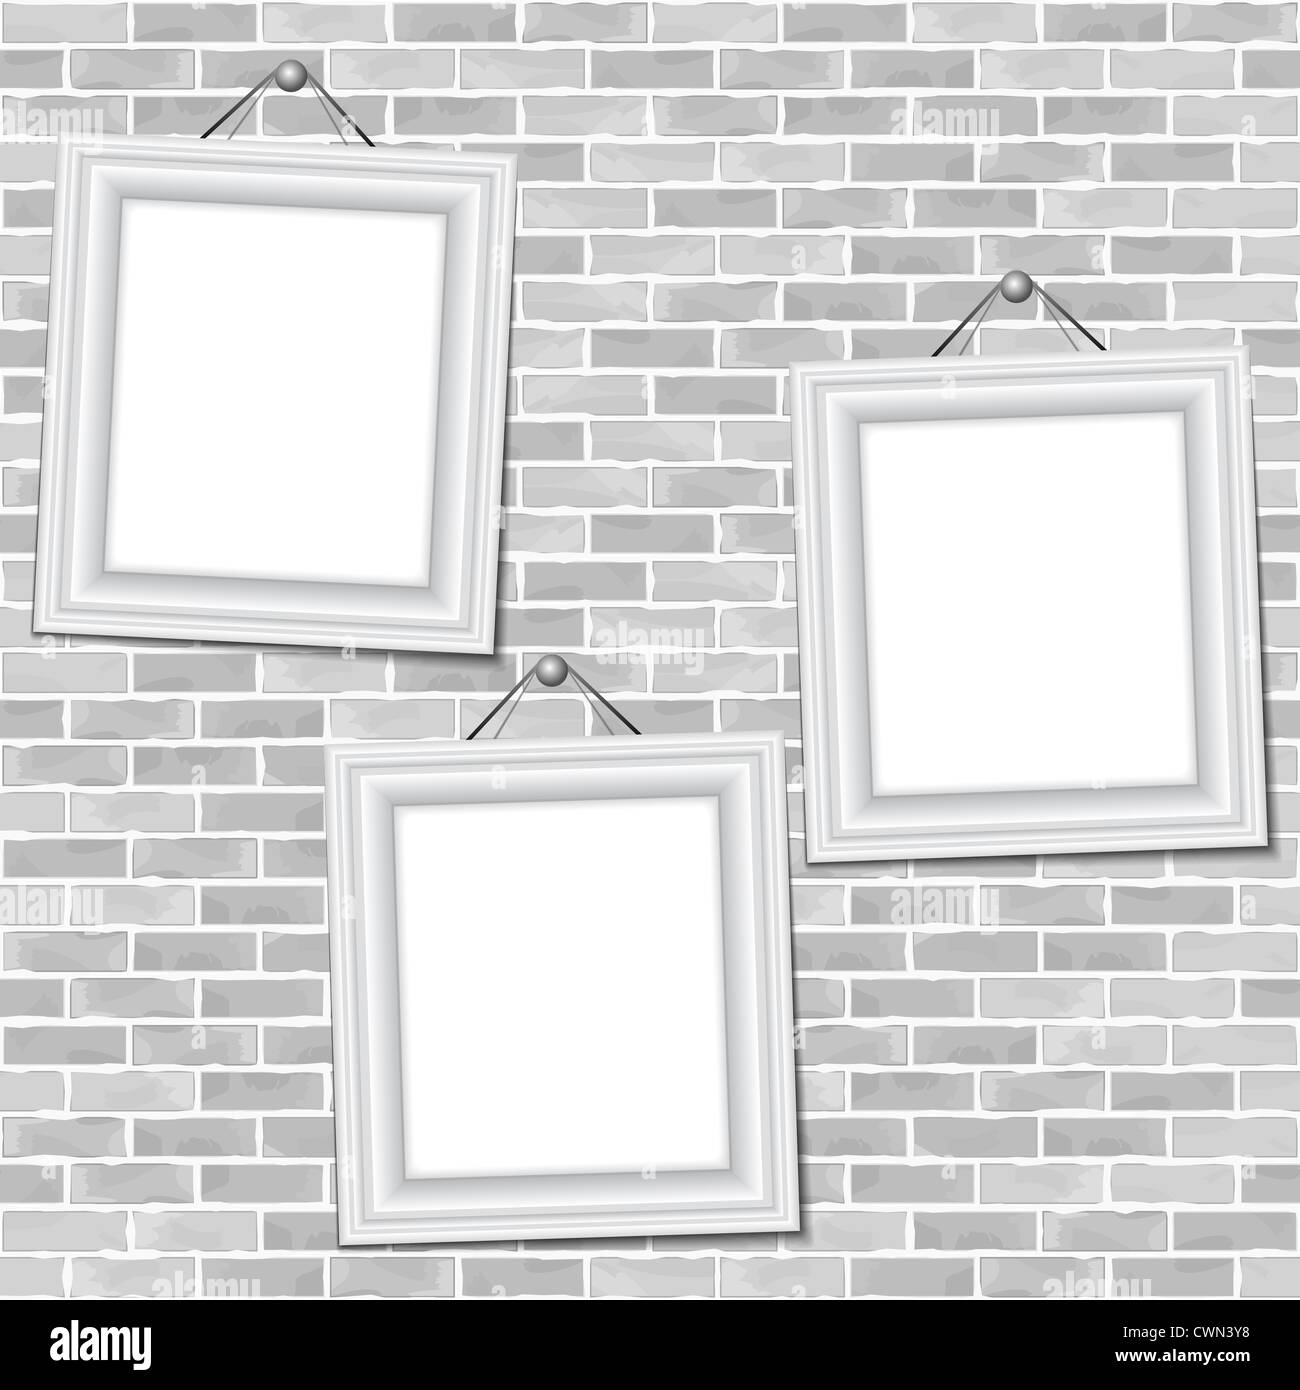 Frames on brick wall Stock Photo